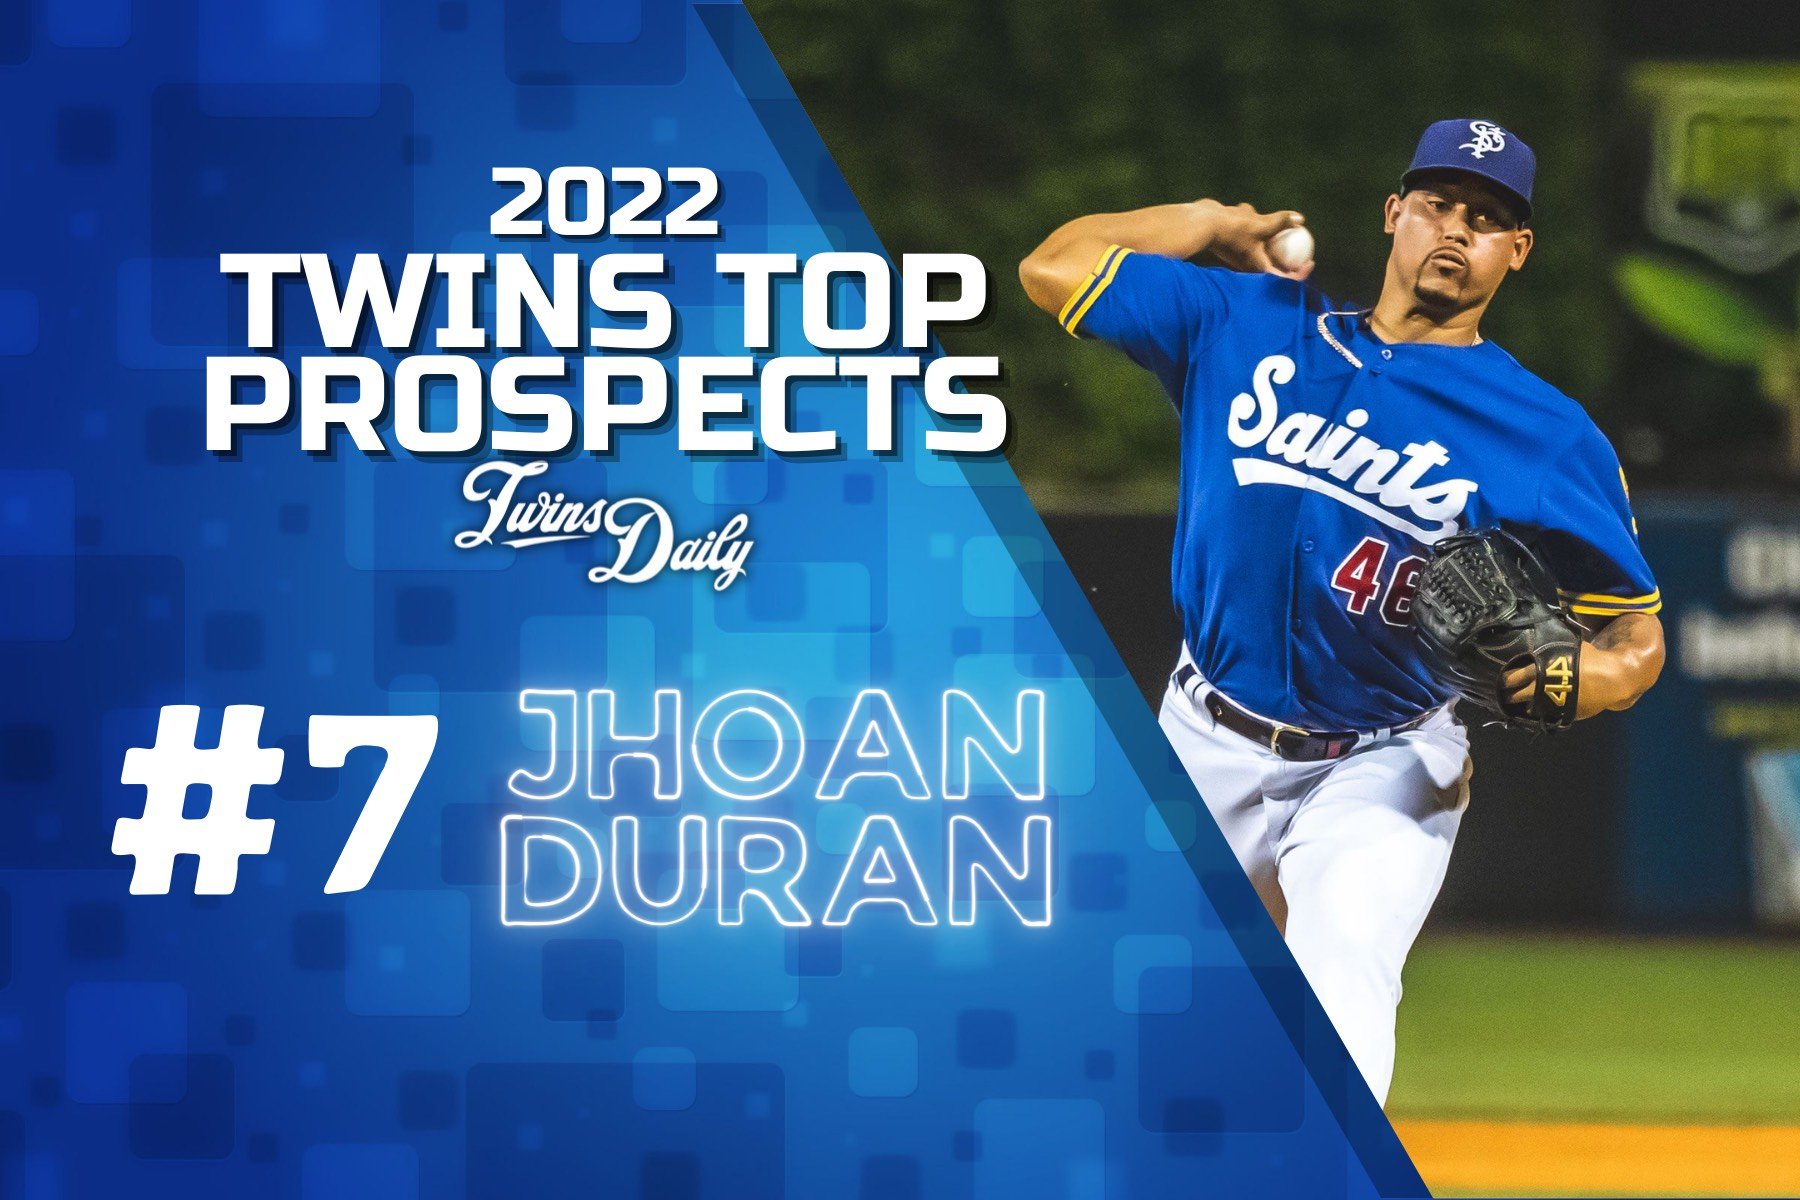 Jhoan Duran - MLB News, Rumors, & Updates